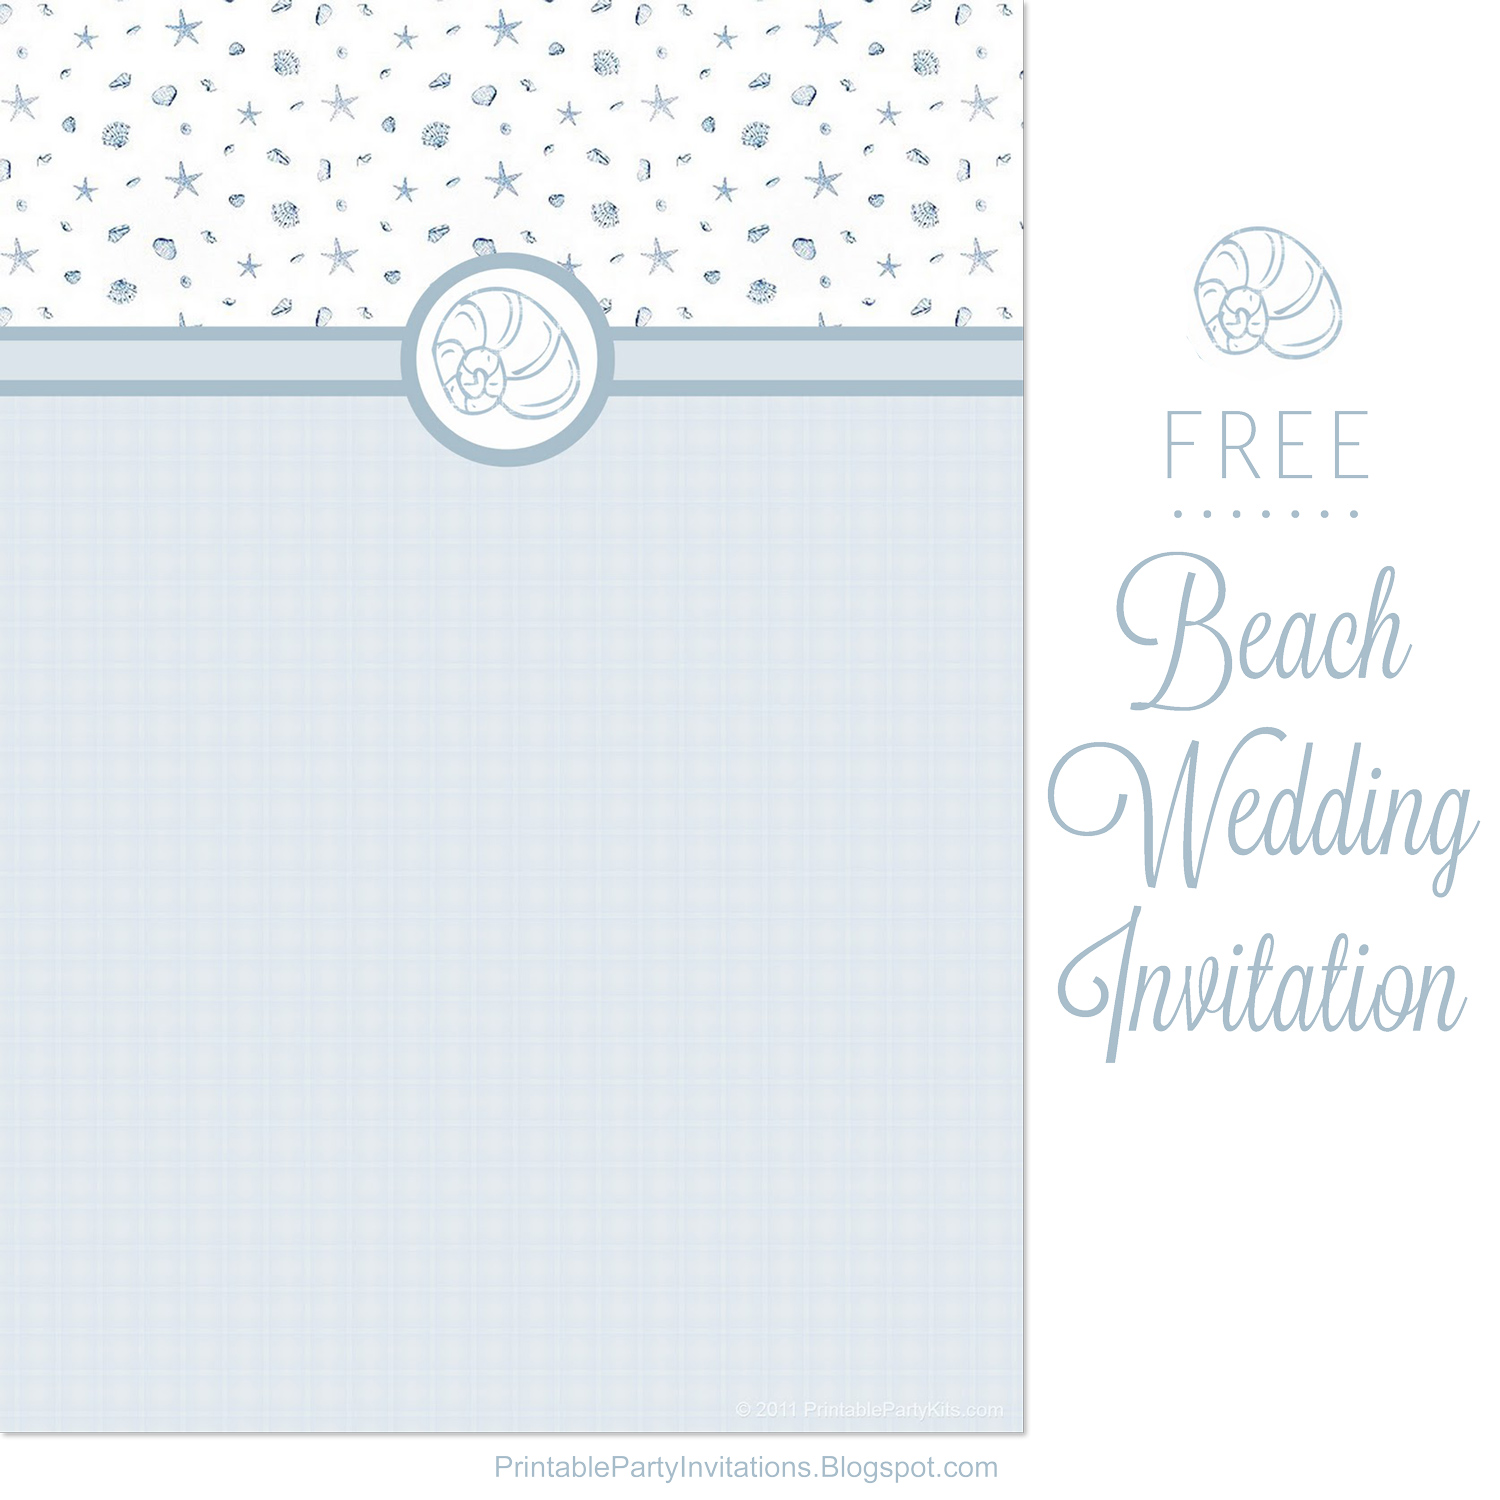 Blue Seas Beach Wedding Invitations Free Printable Party Invitations